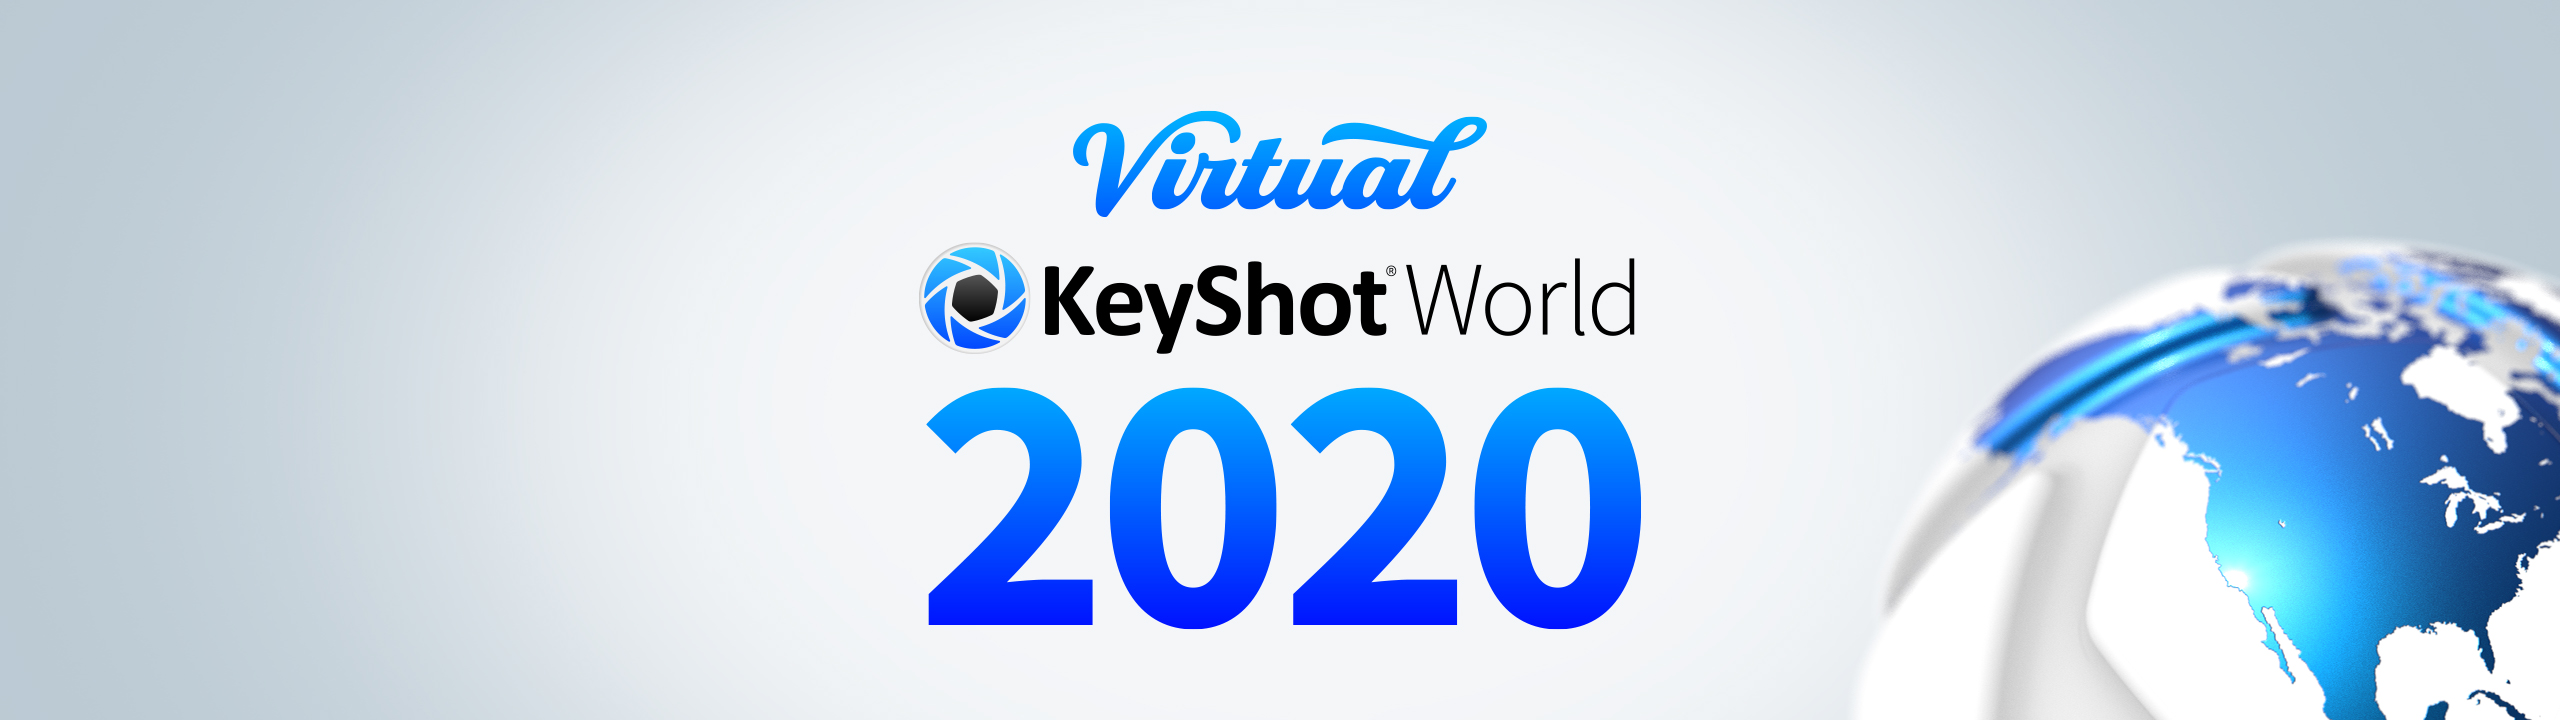 Virtual KeyShot World 2020 – ‘9 Days of KeyShot 9’ Recap